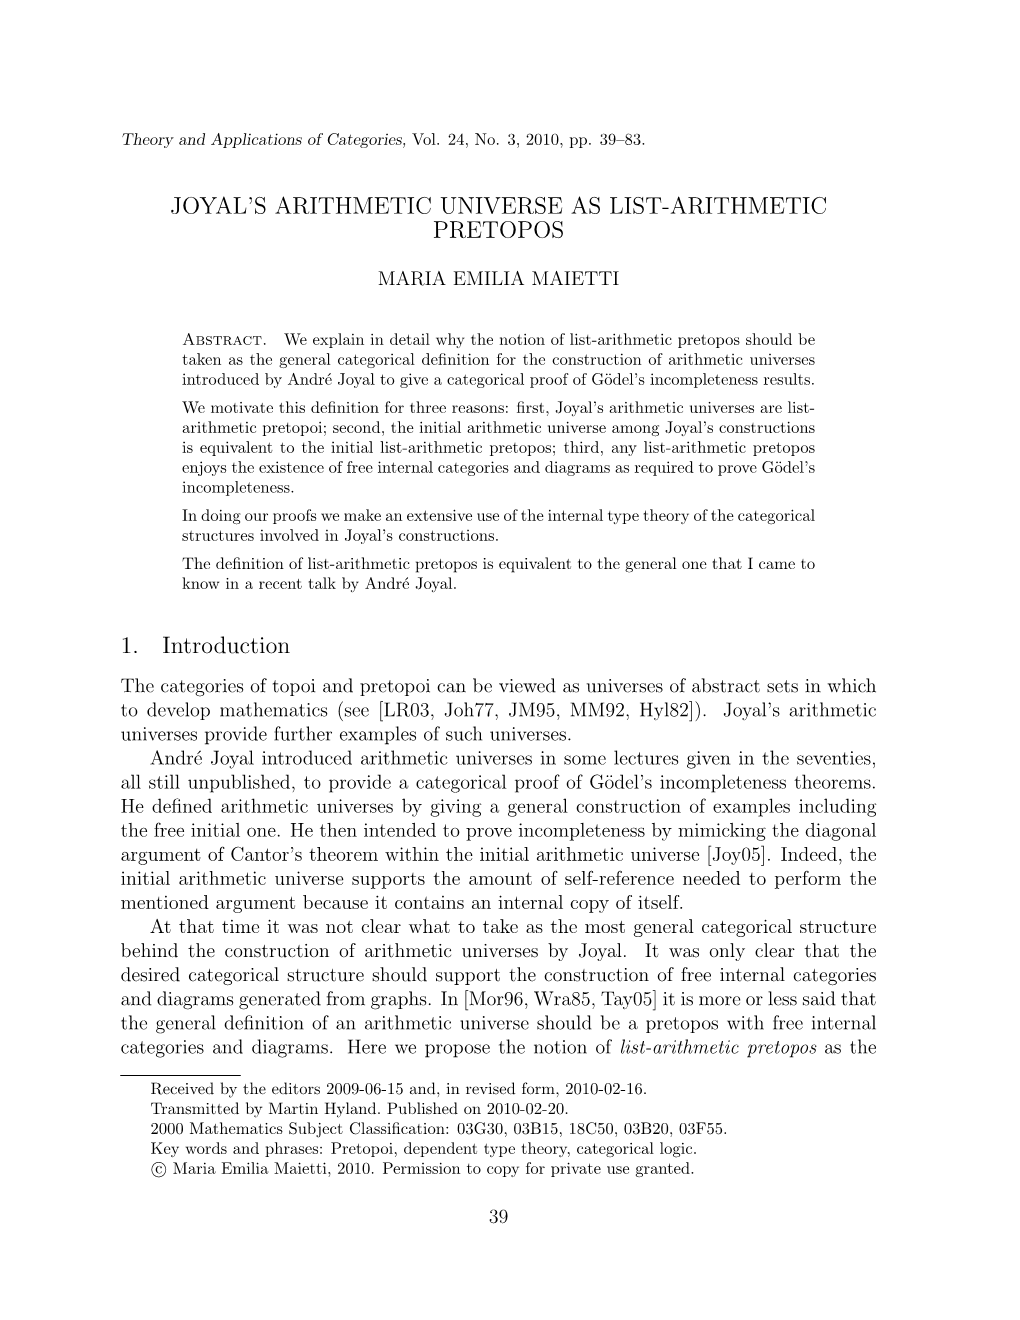 Joyal's Arithmetic Universe As List-Arithmetic Pretopos 1